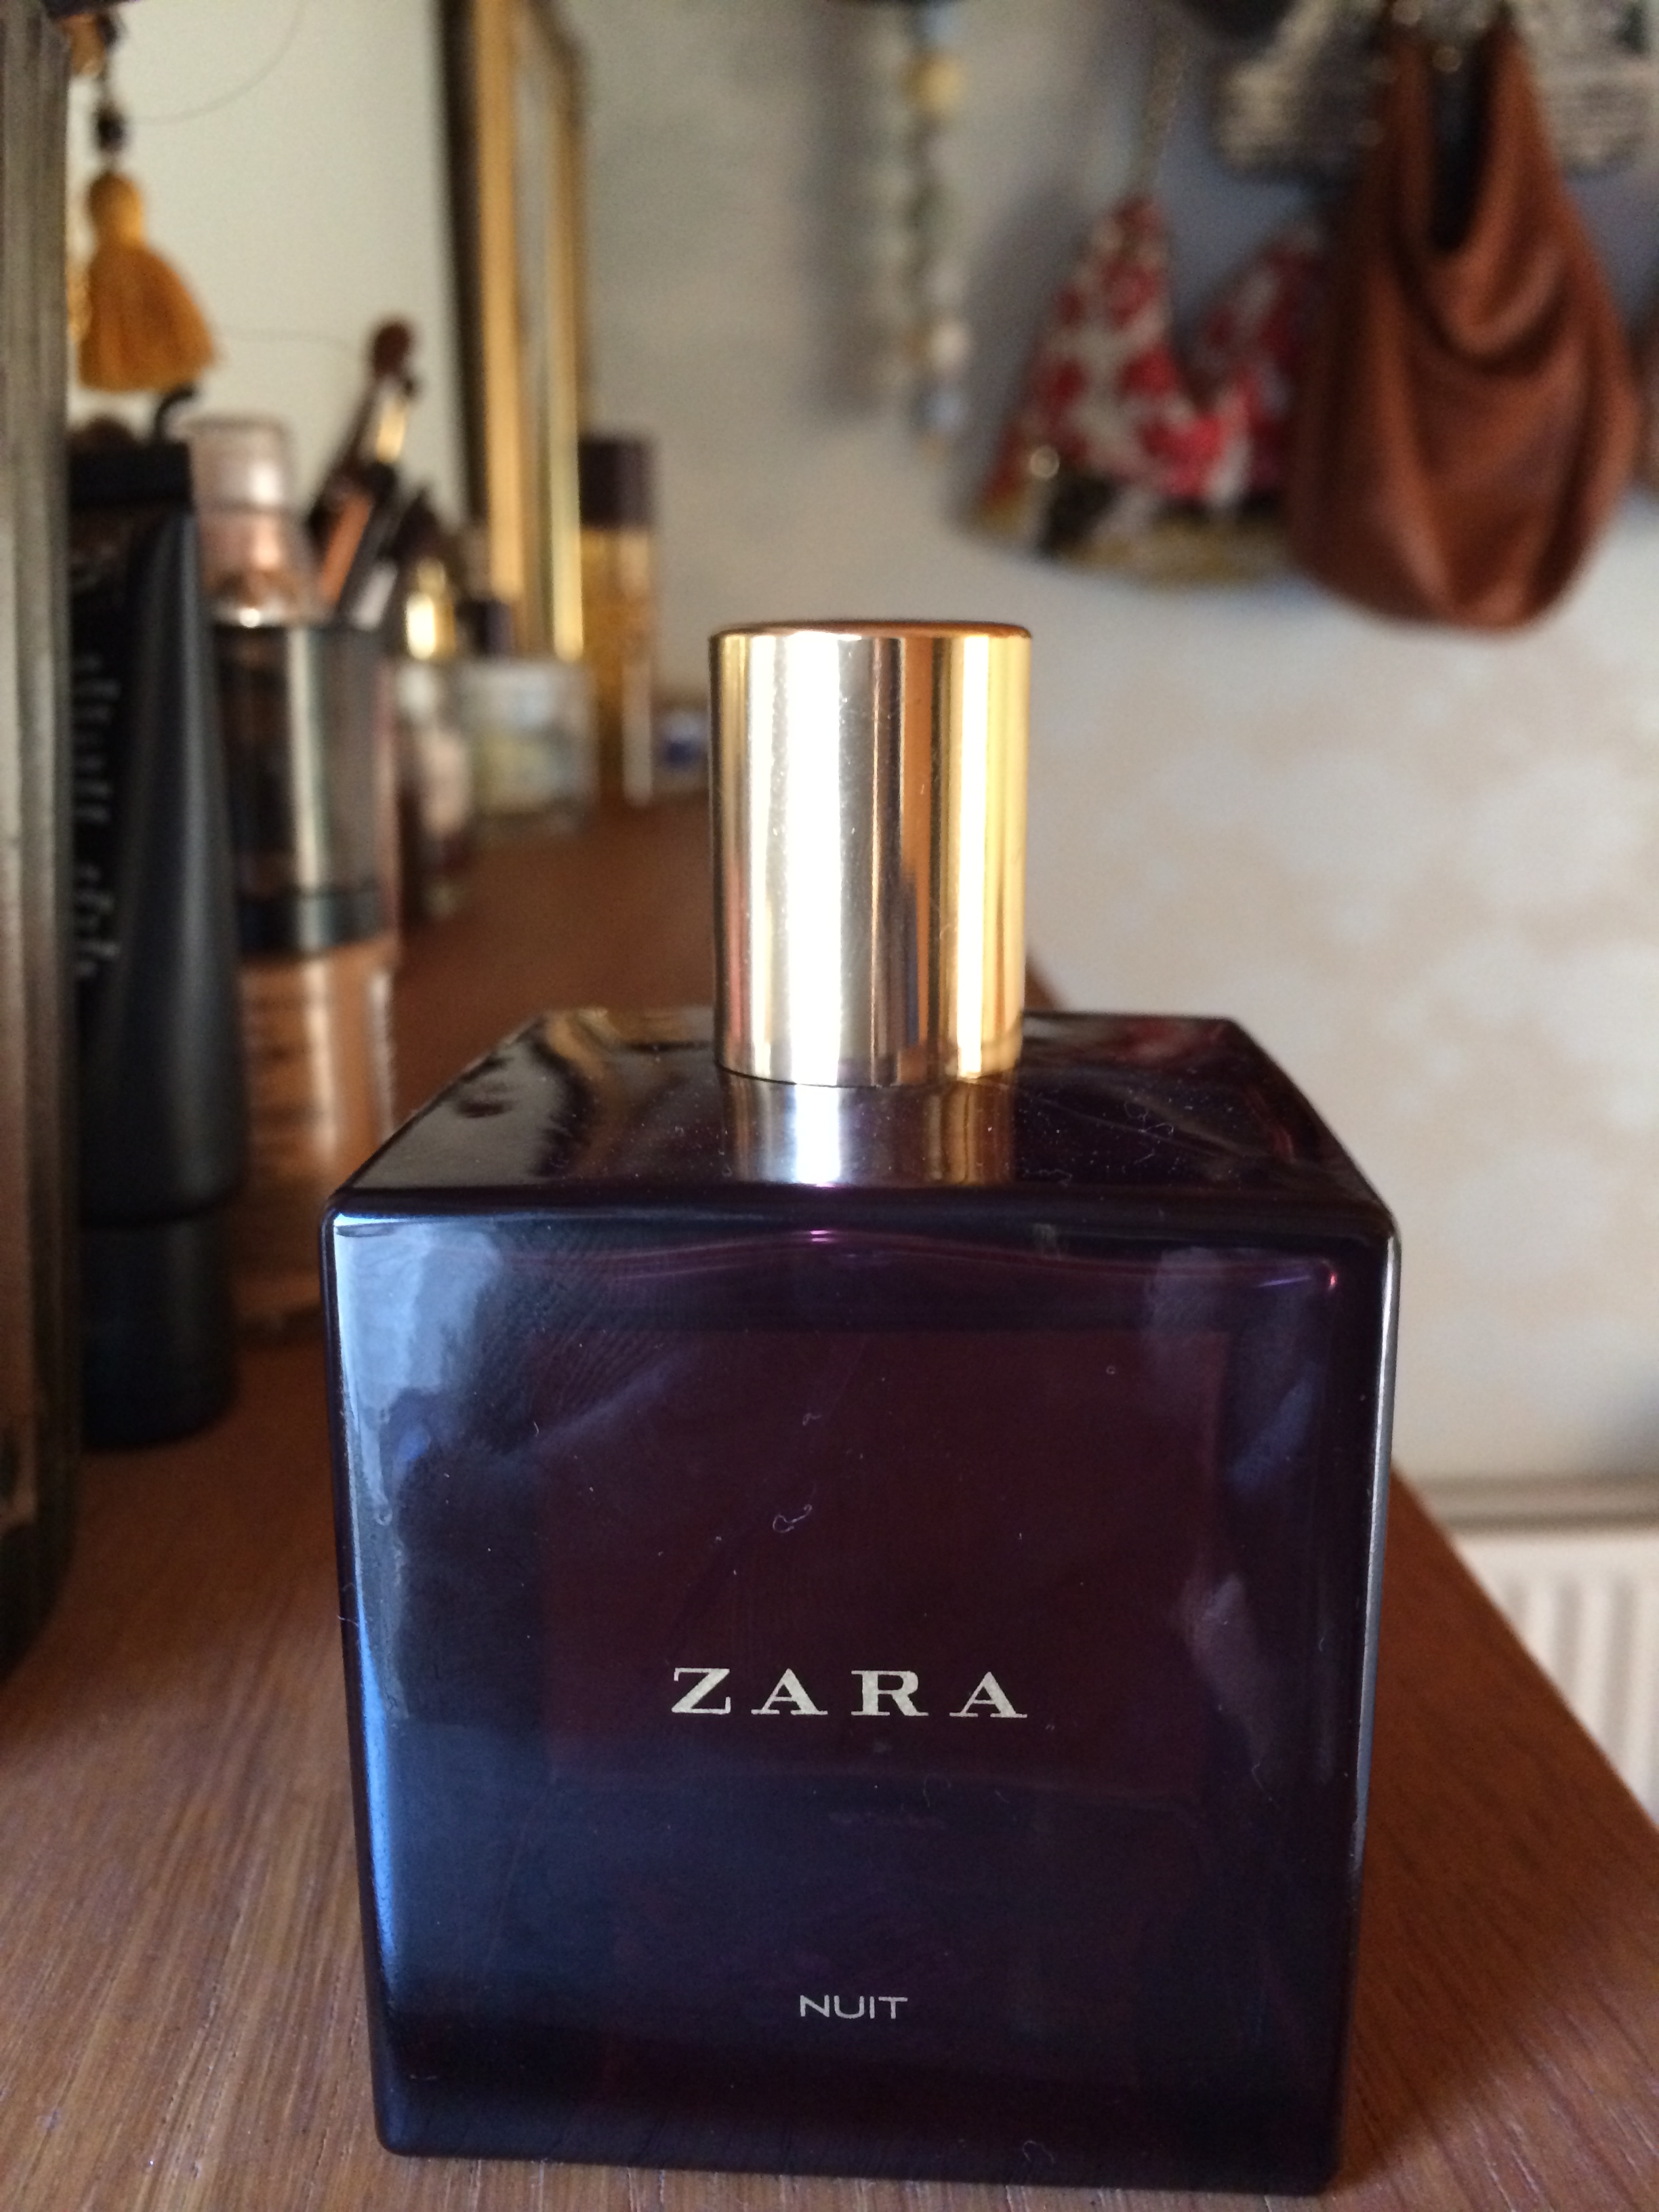 Zara Nuit Perfume | Chitra's Things